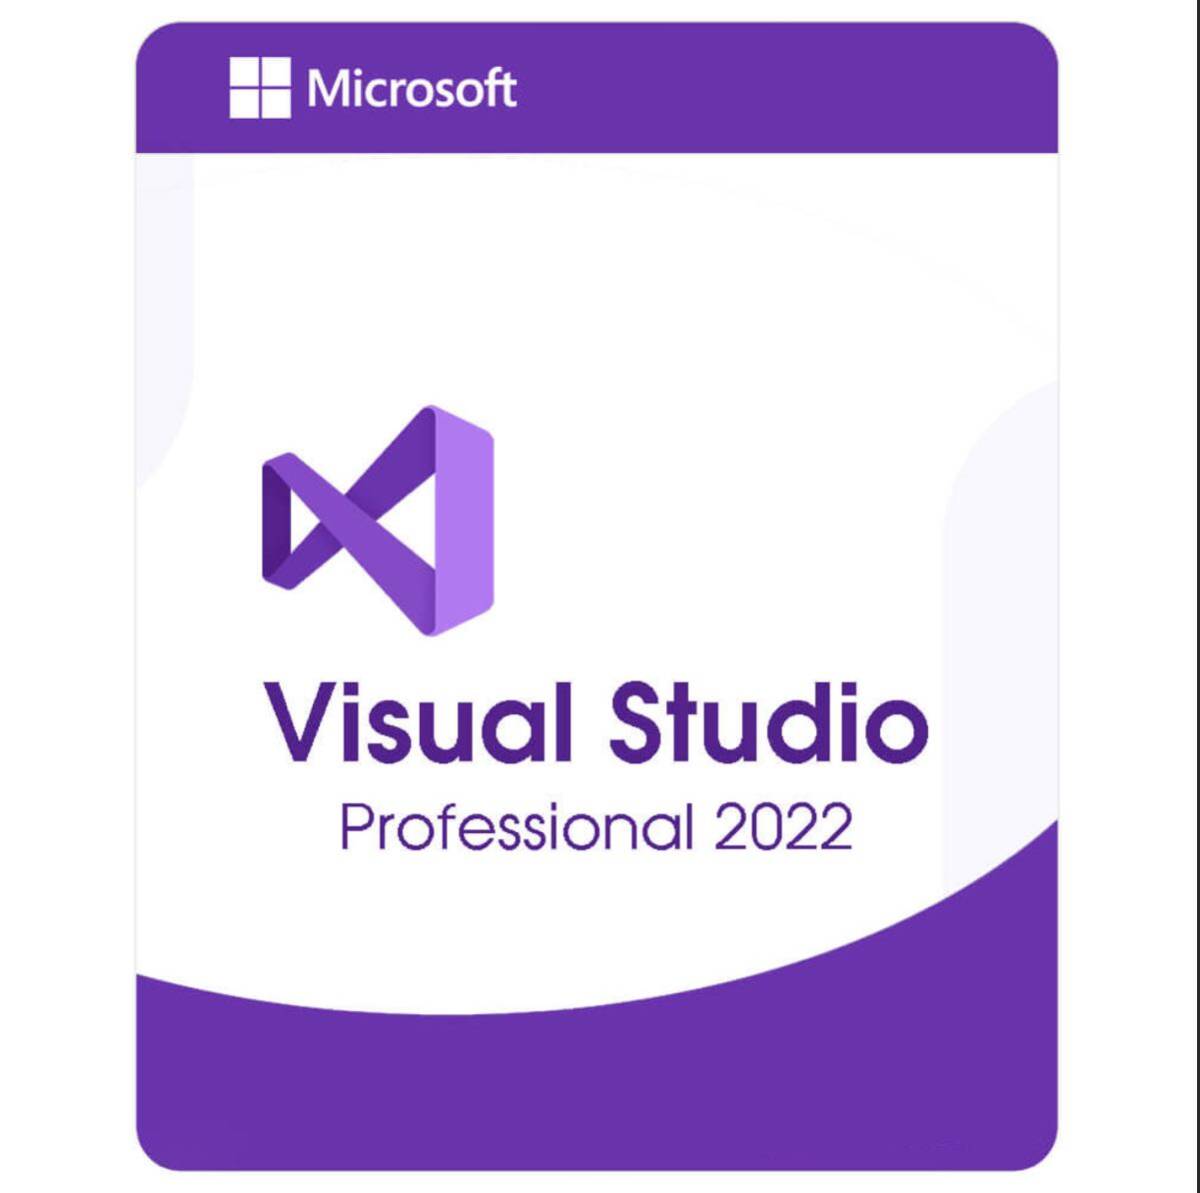 Microsoft Visual Studio Professional 2022 正規日本語版 リテール版プロダクトキー 認証保証の画像1